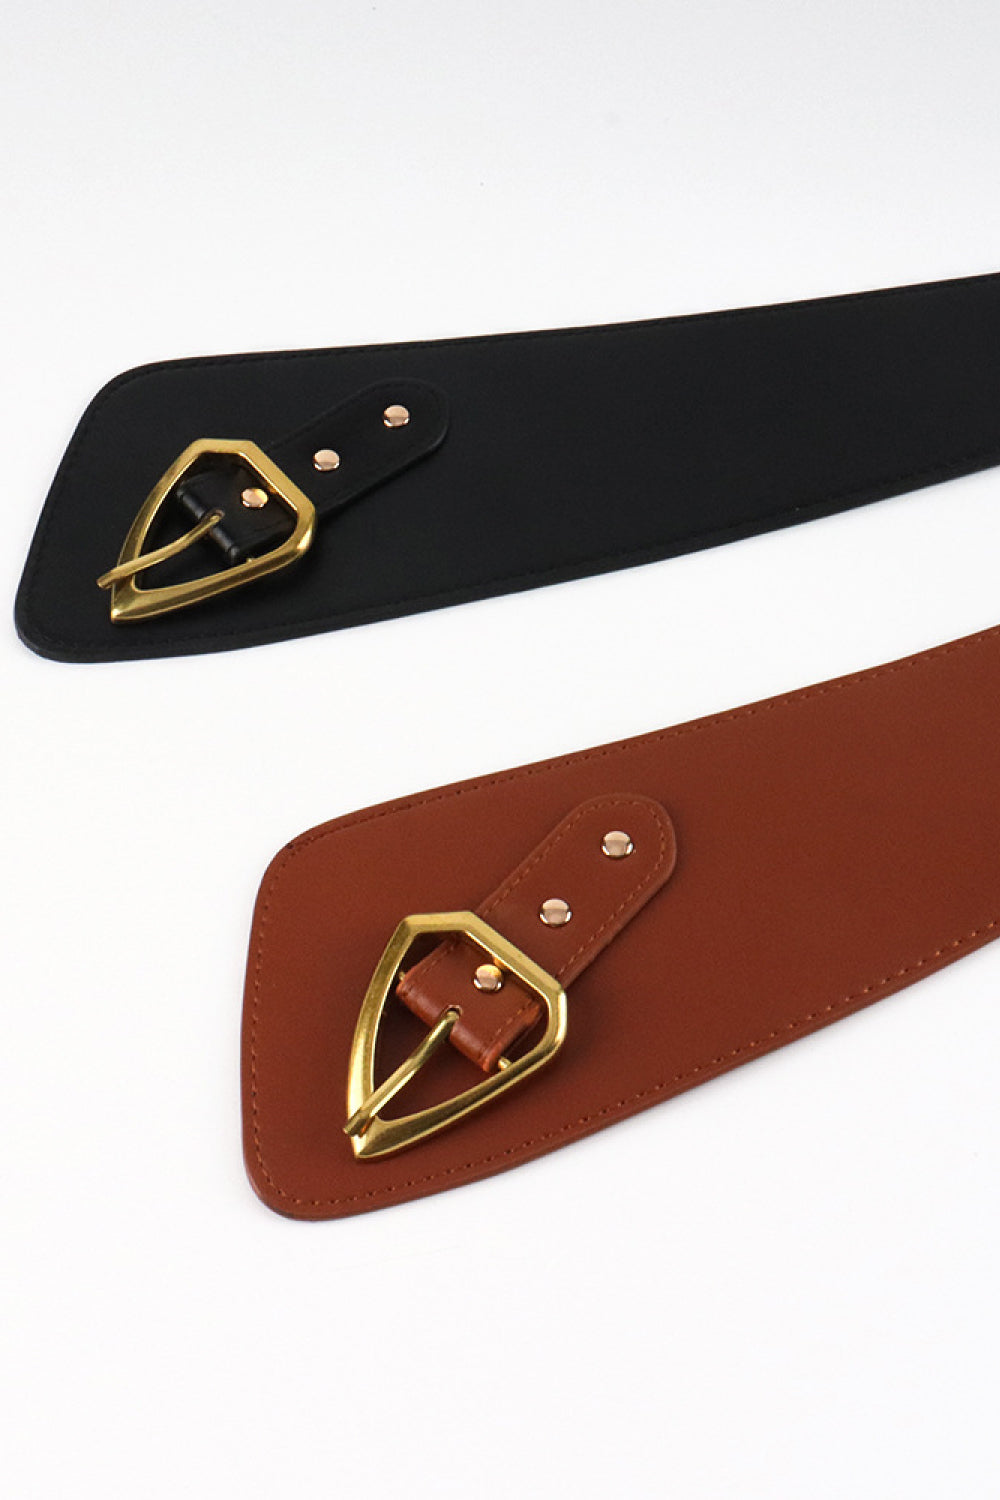 The Olivet PU Leather Belt